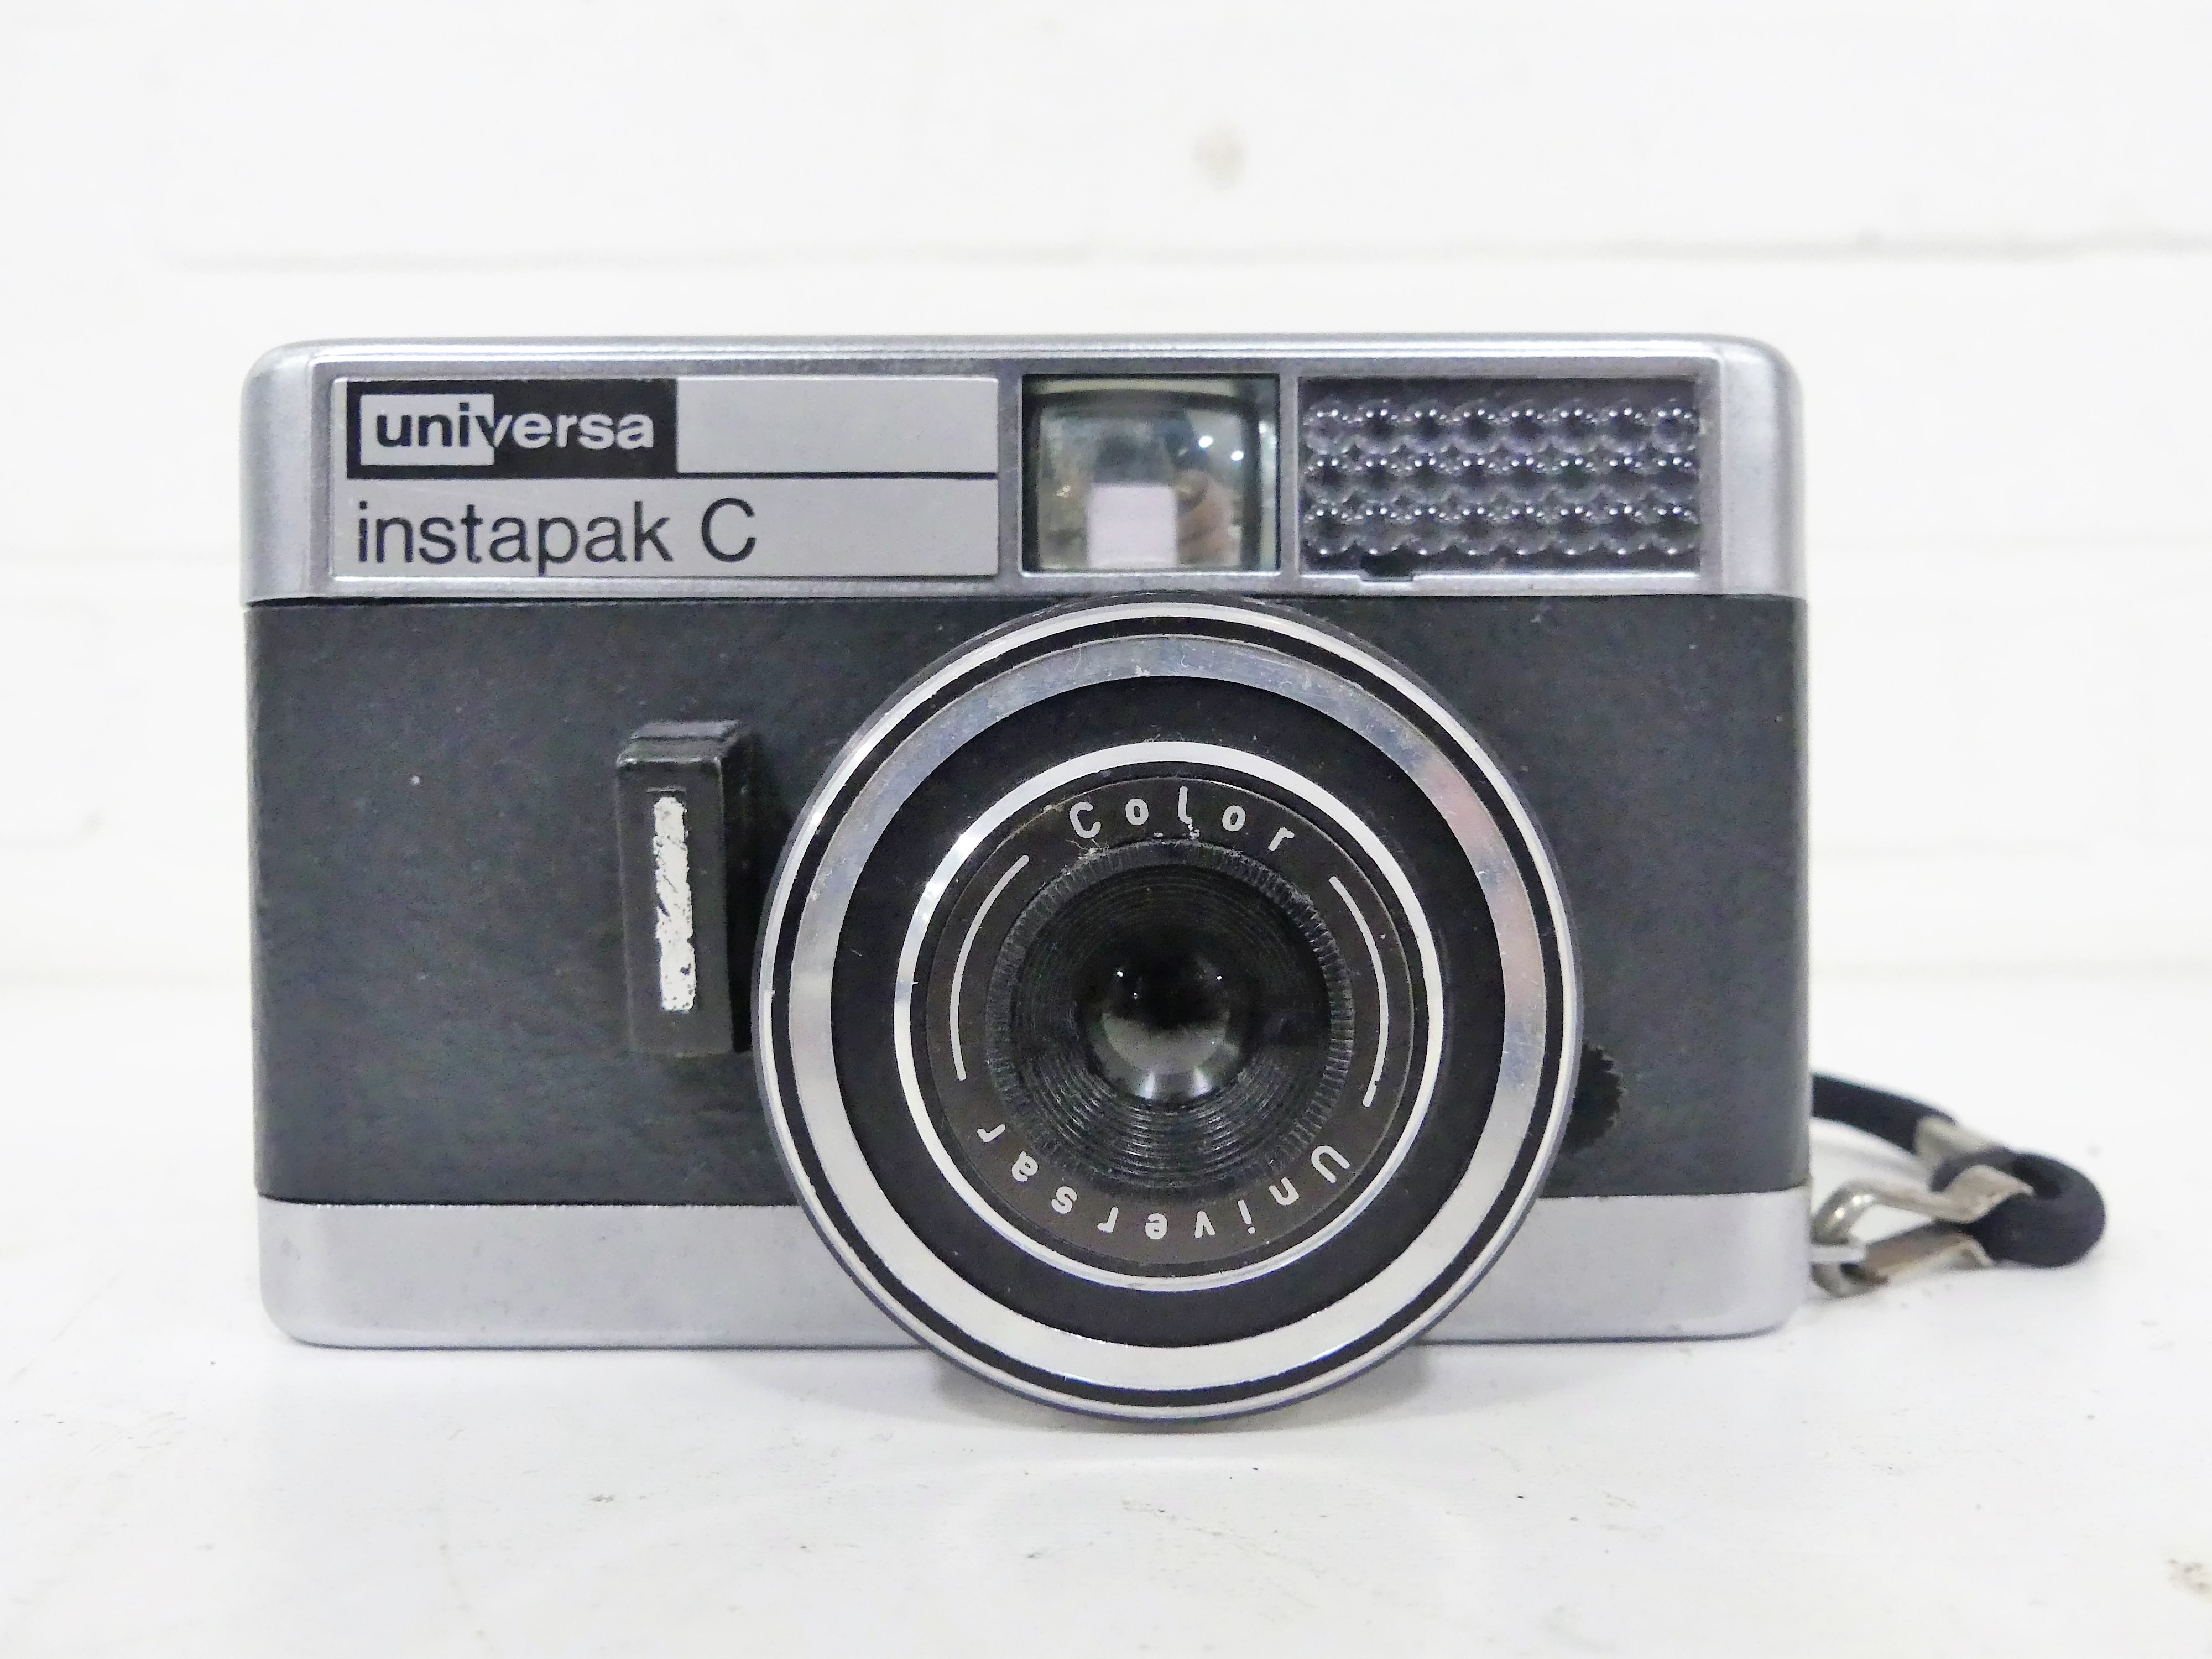 Universa camera Instapak C, 1968